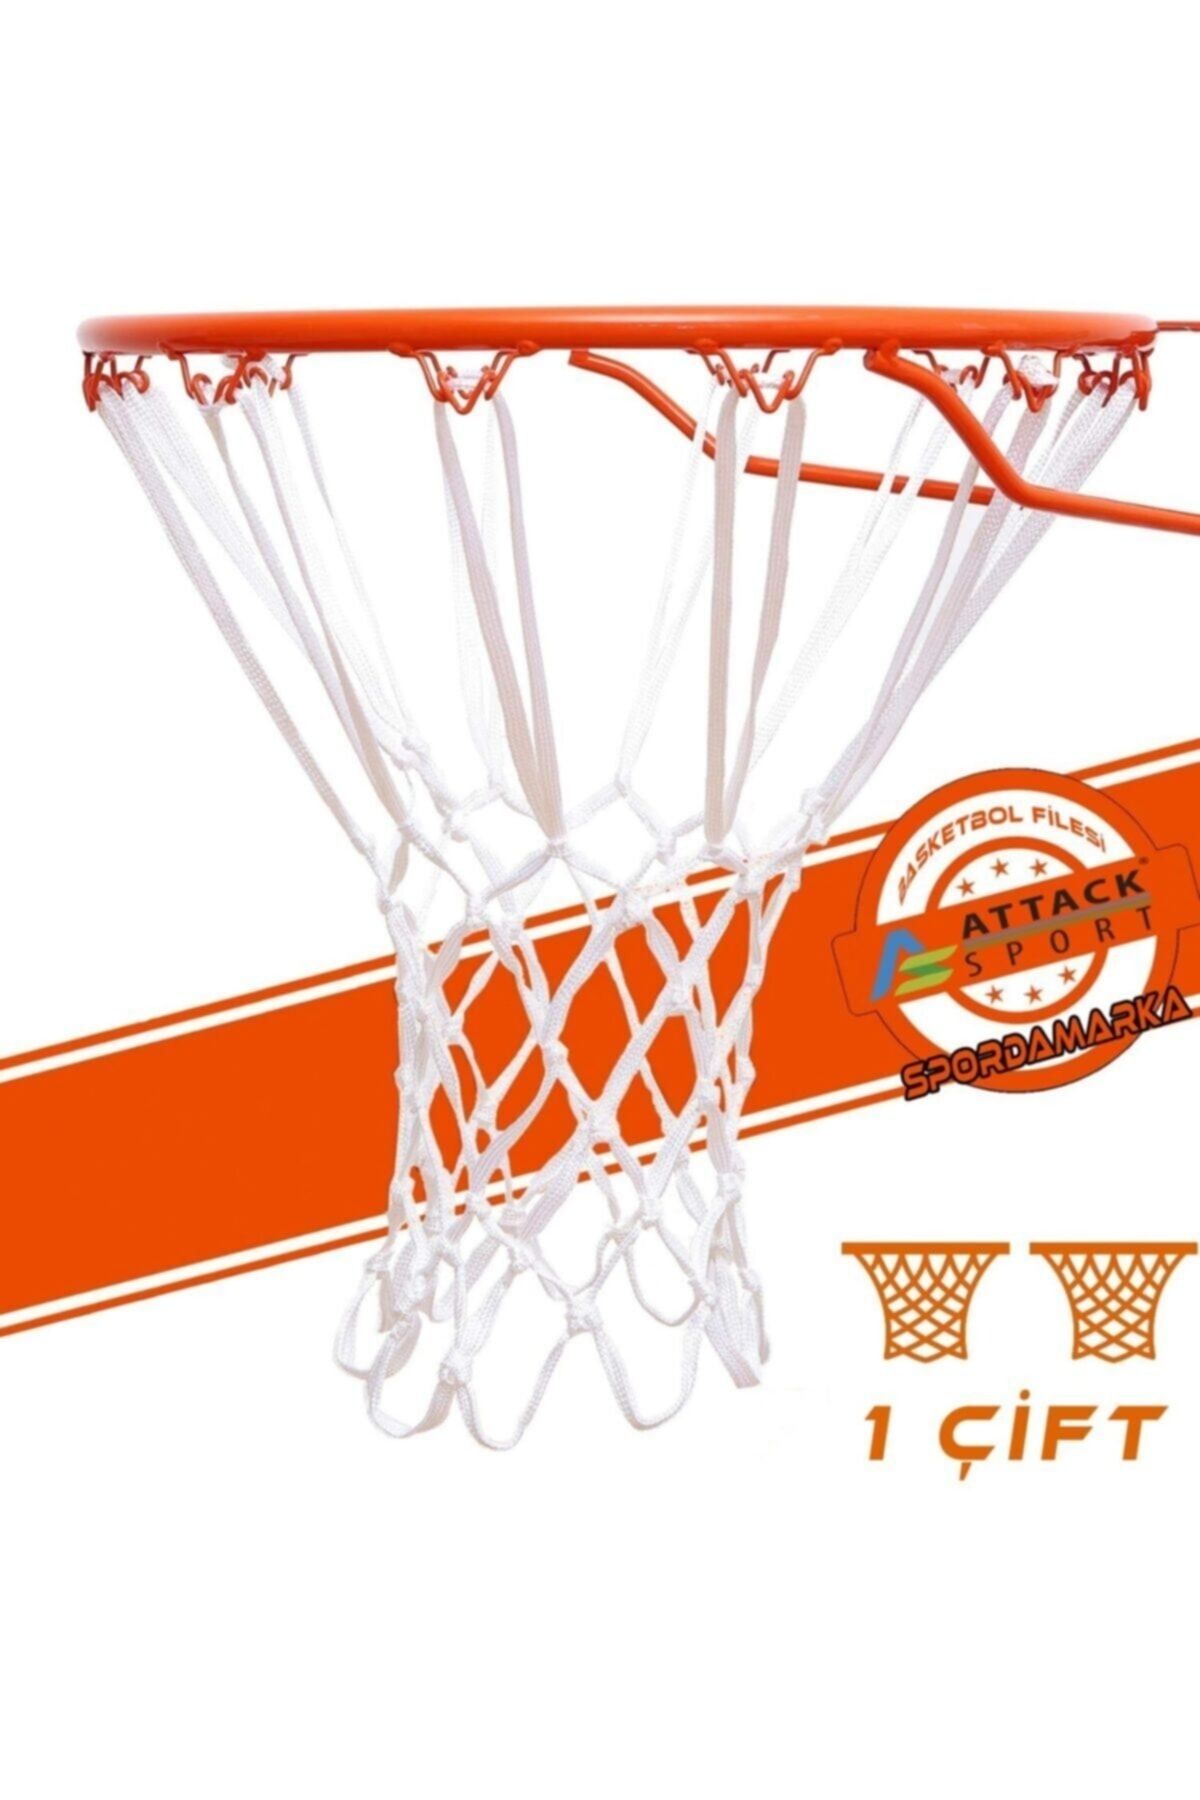 Attack Sport Basketbol Filesi 4 Mm 4x4 Cm